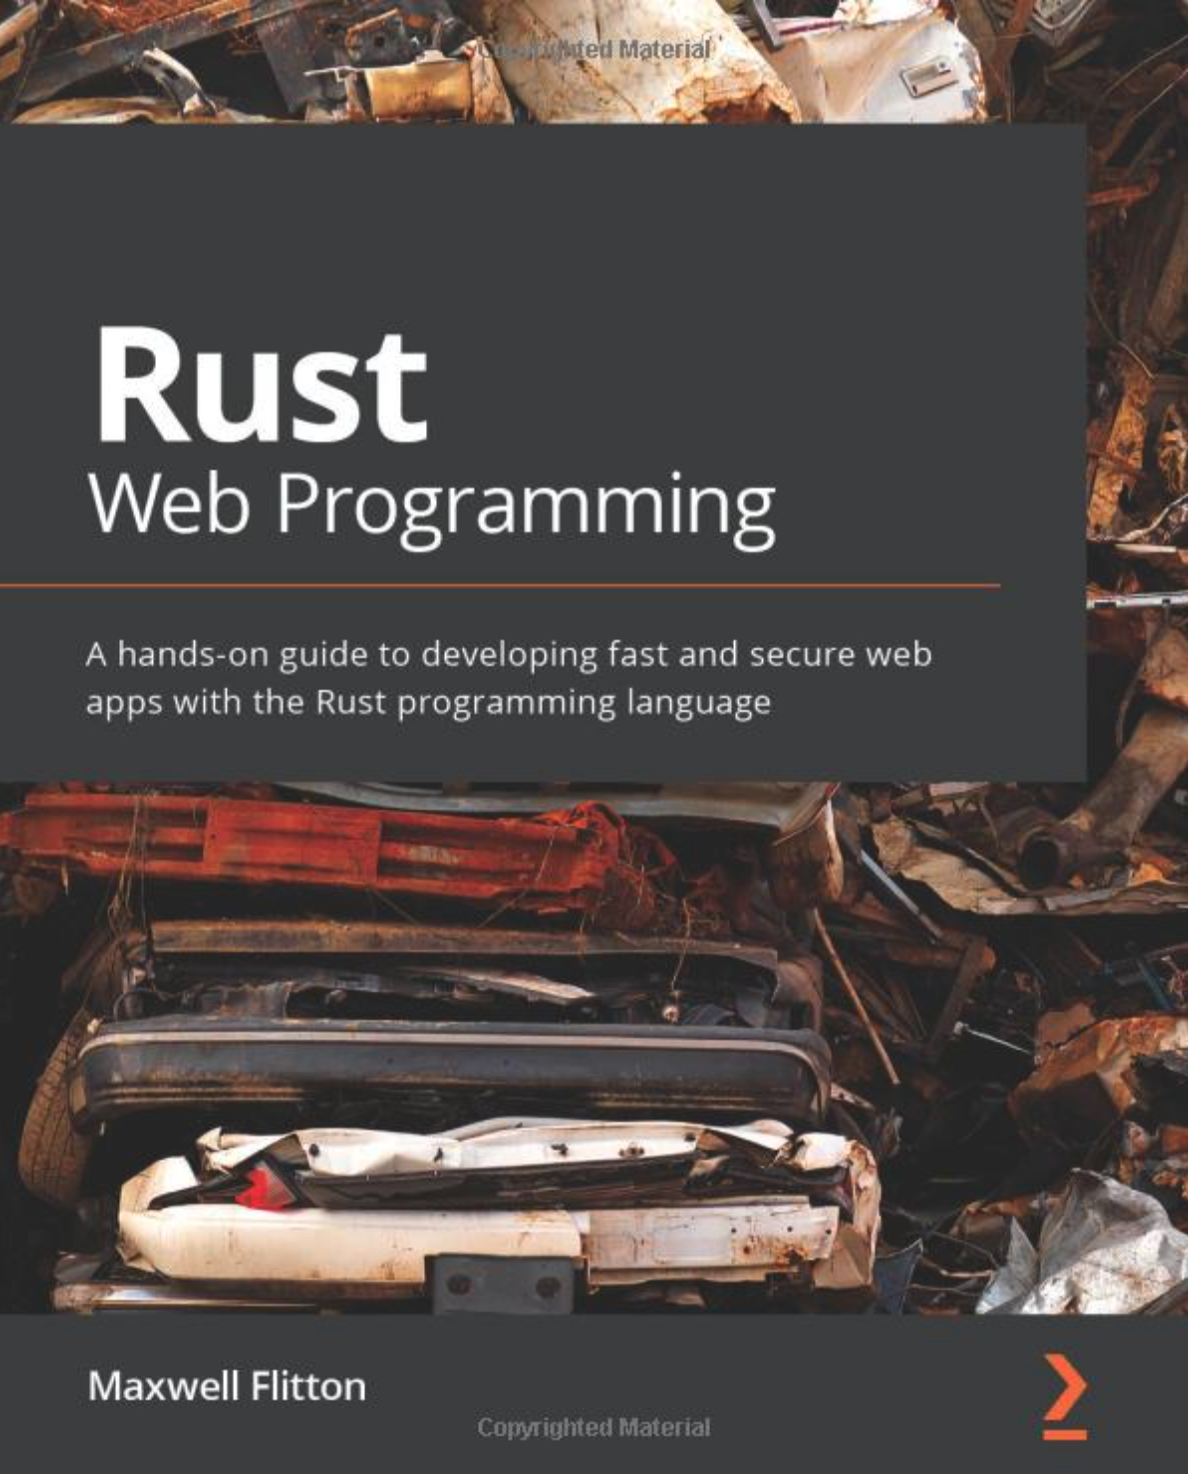 My book on Rust web programming